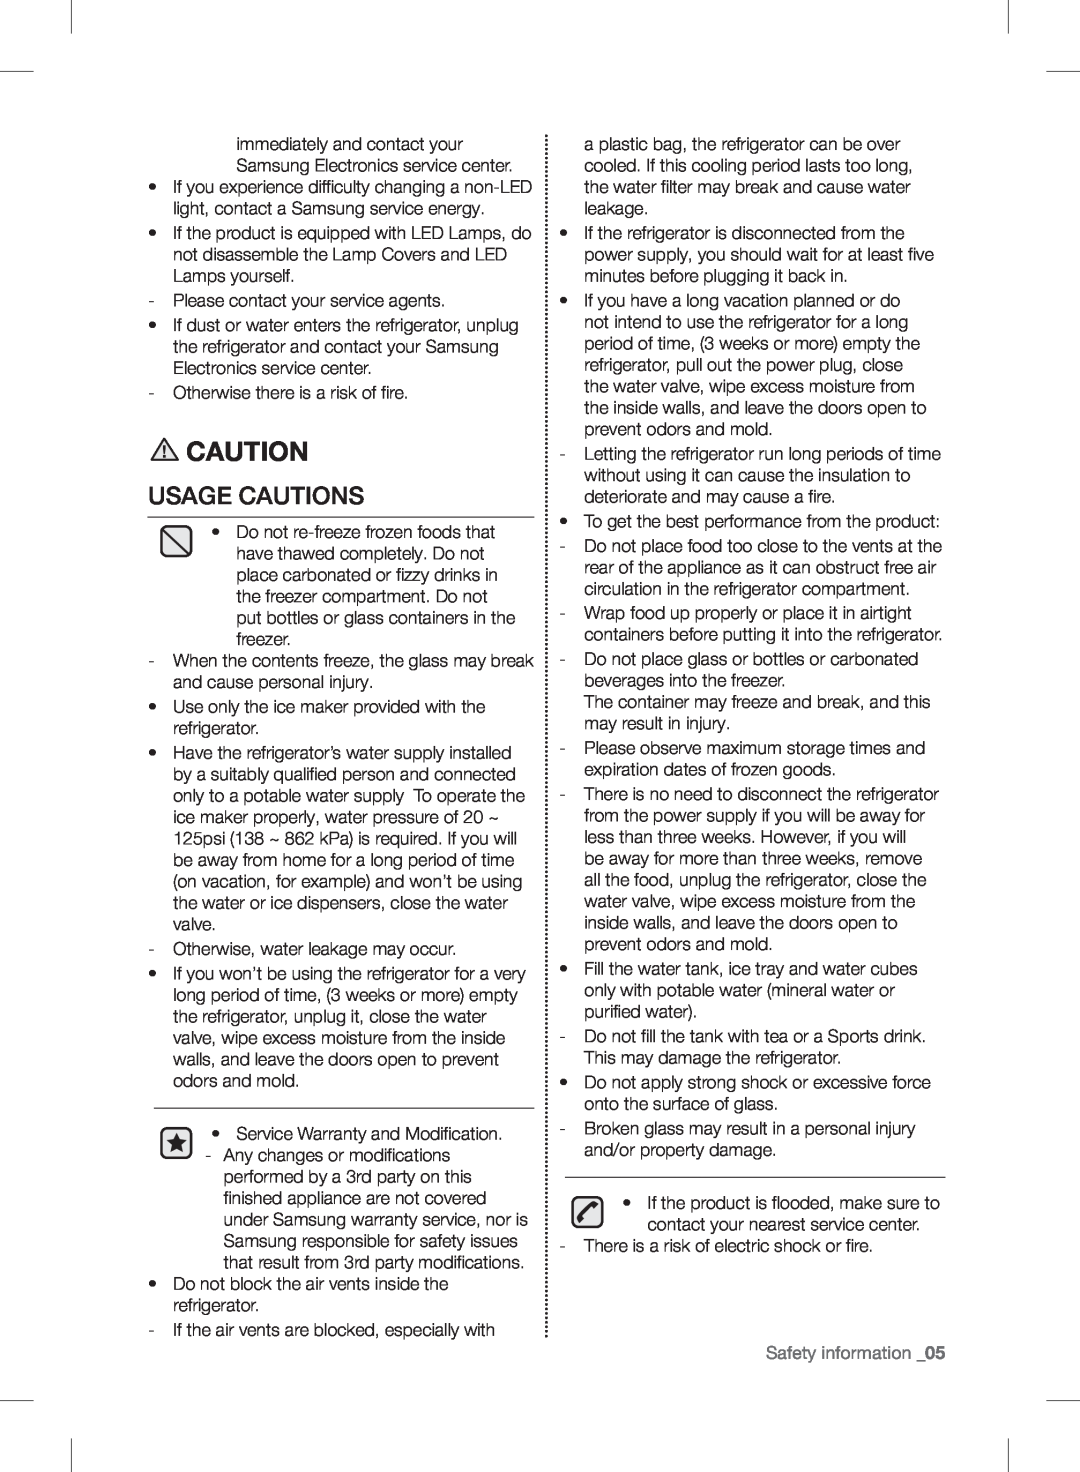 Samsung RF24FSEDBSR user manual Usage Cautions, Safety information _05 